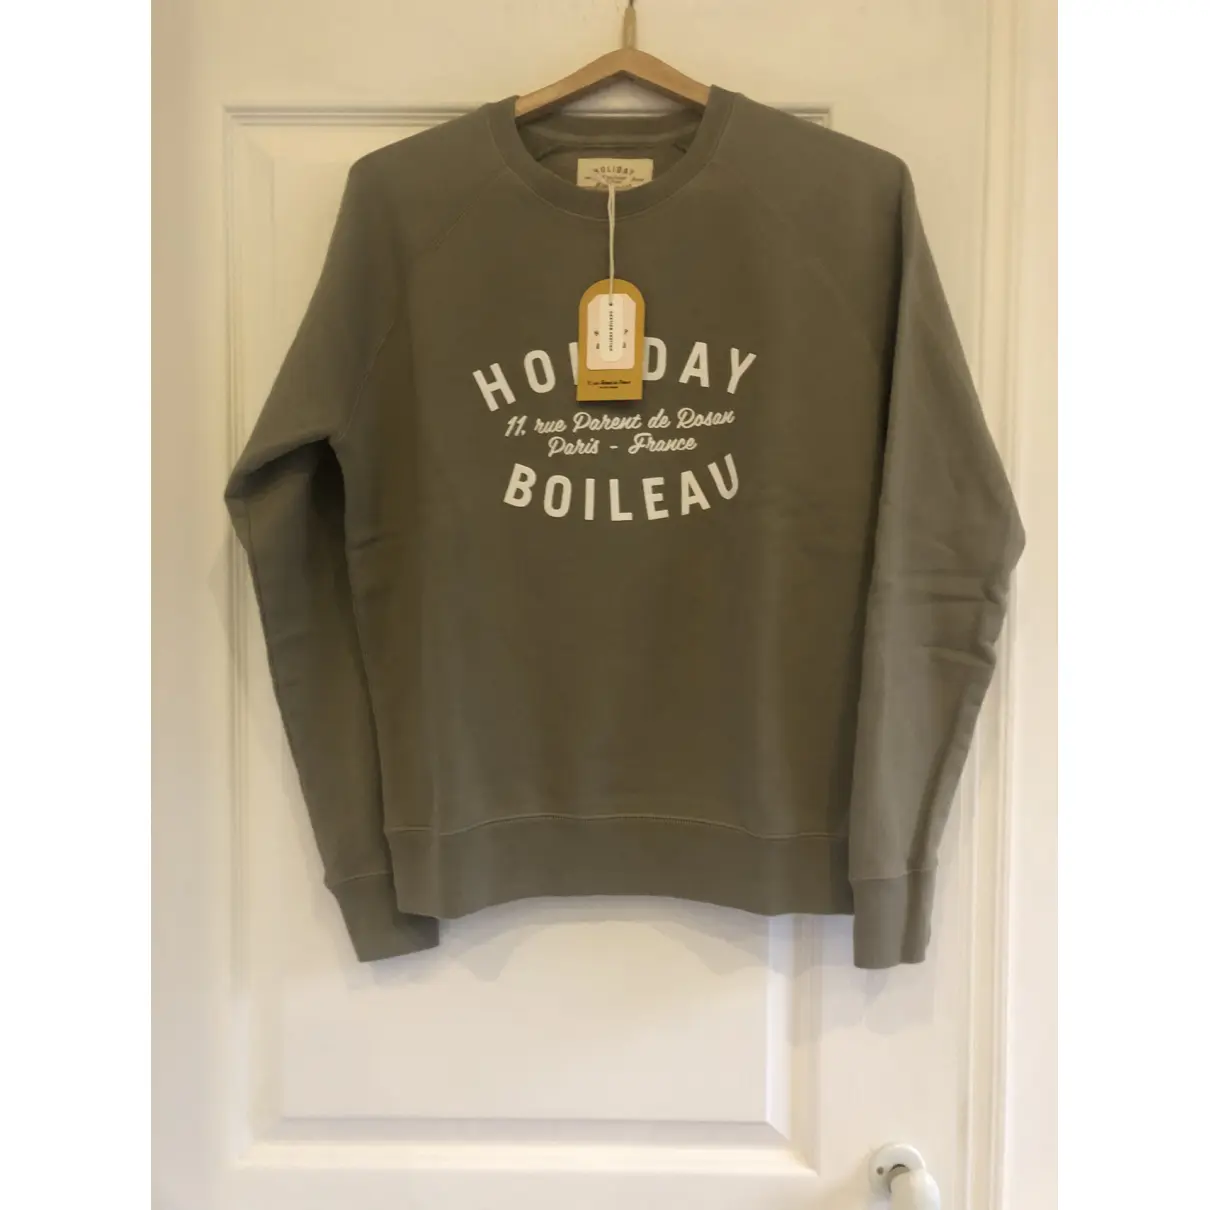 Buy Holiday boileau Sweatshirt online